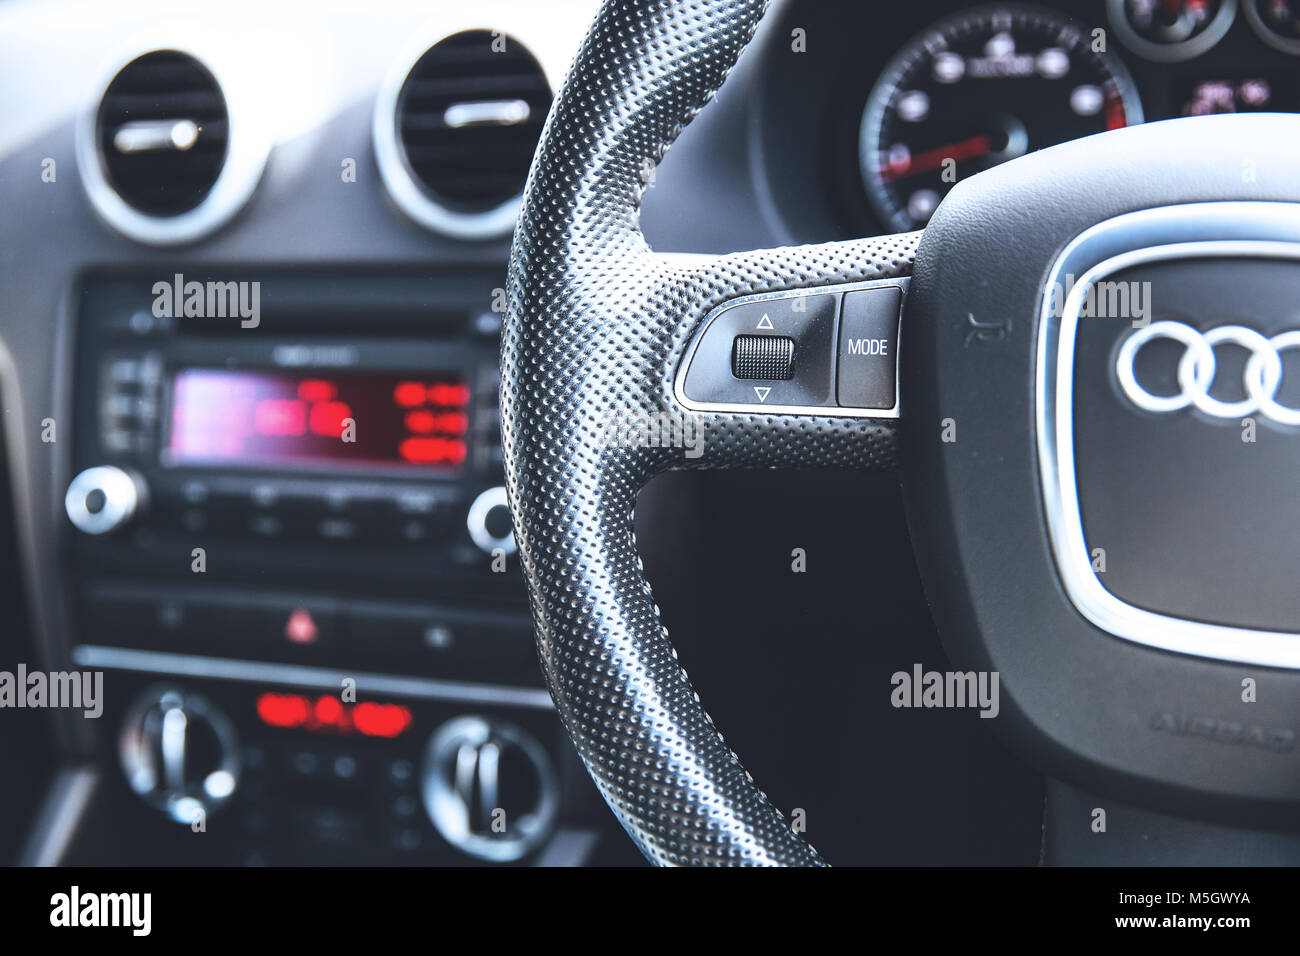 Audi A4 B5 steering wheel Stock Photo - Alamy